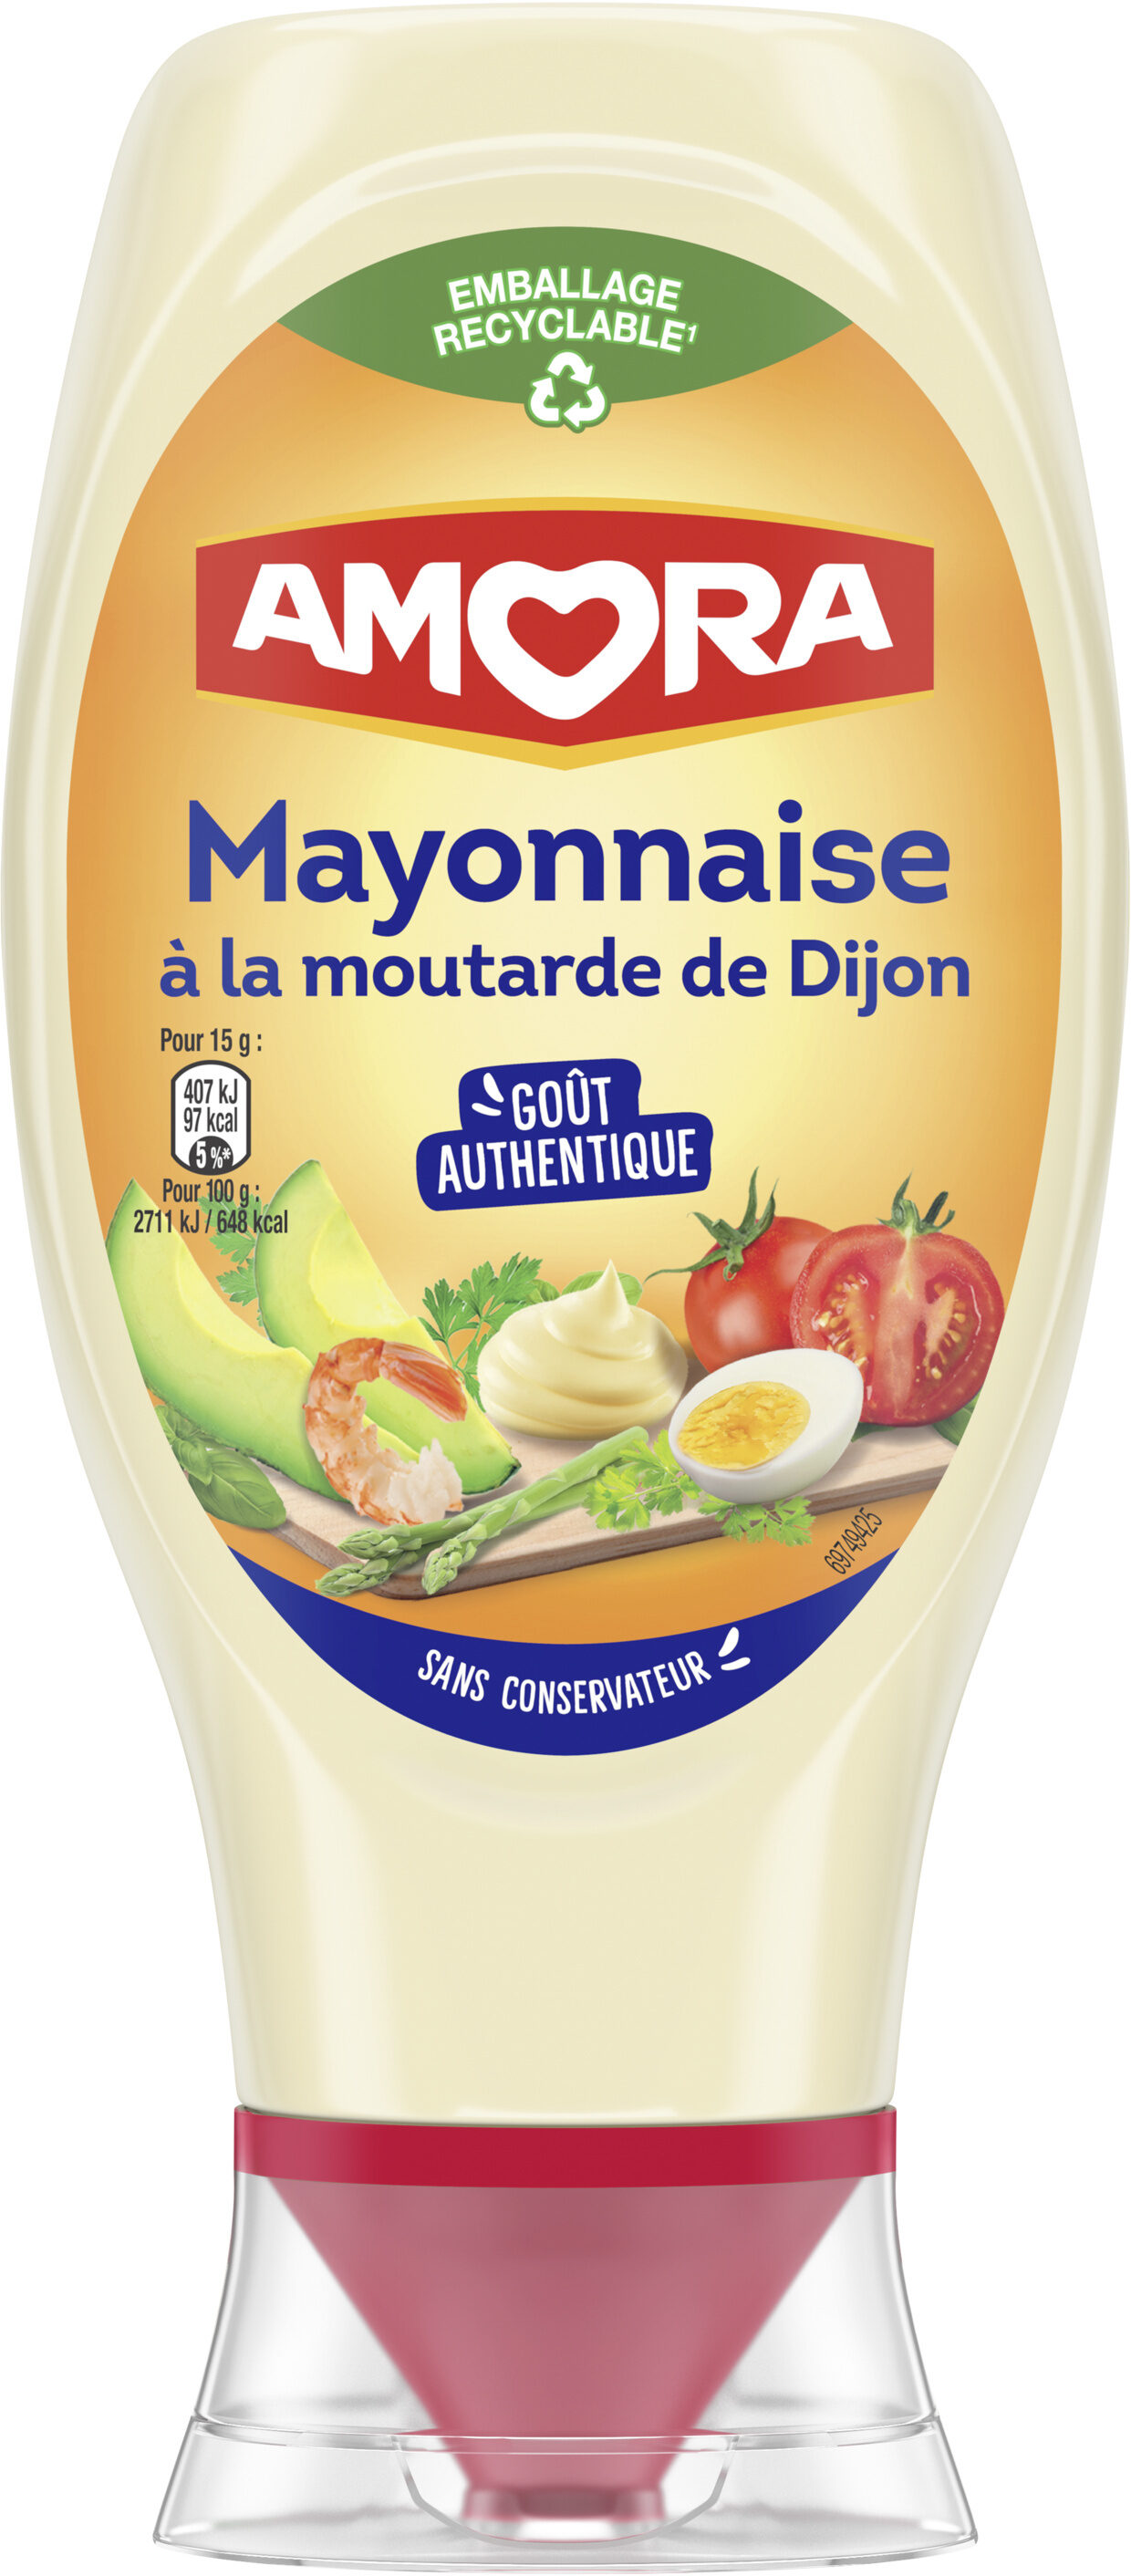 Amora Mayonnaise De Dijon Flacon Souple 415g - Producte - fr